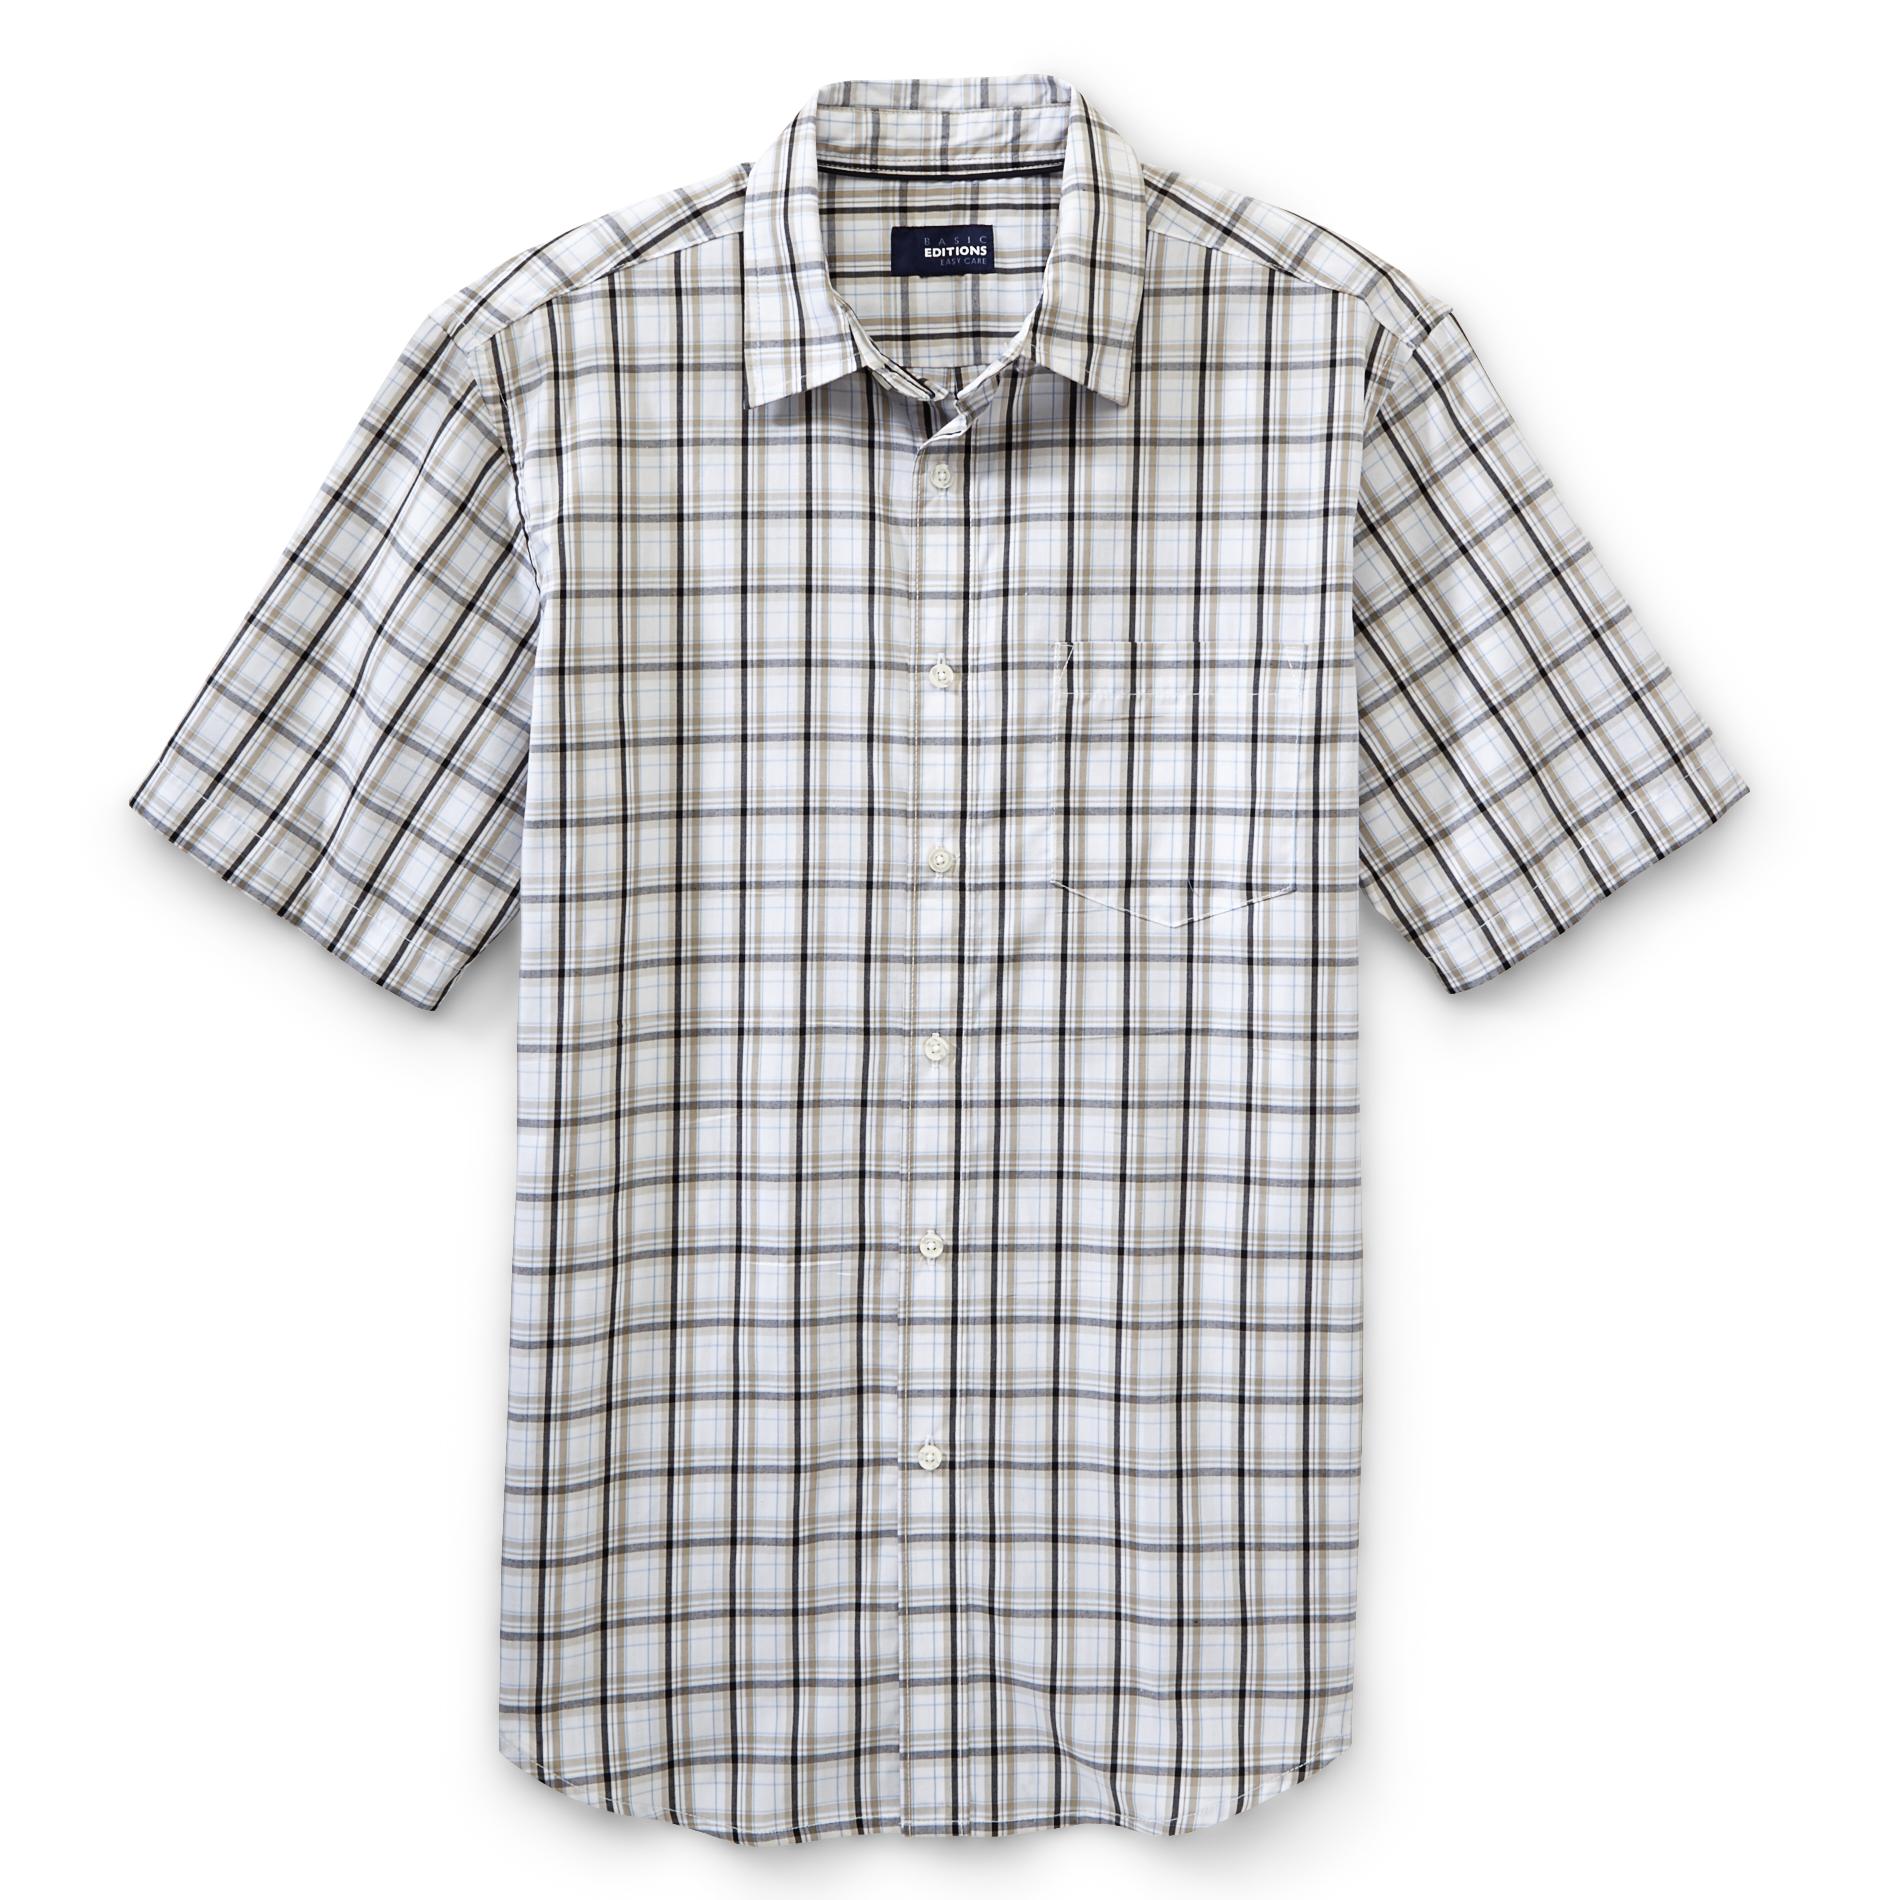 Basic Editions Men's Easy-Care Short-Sleeve Shirt - Plaid